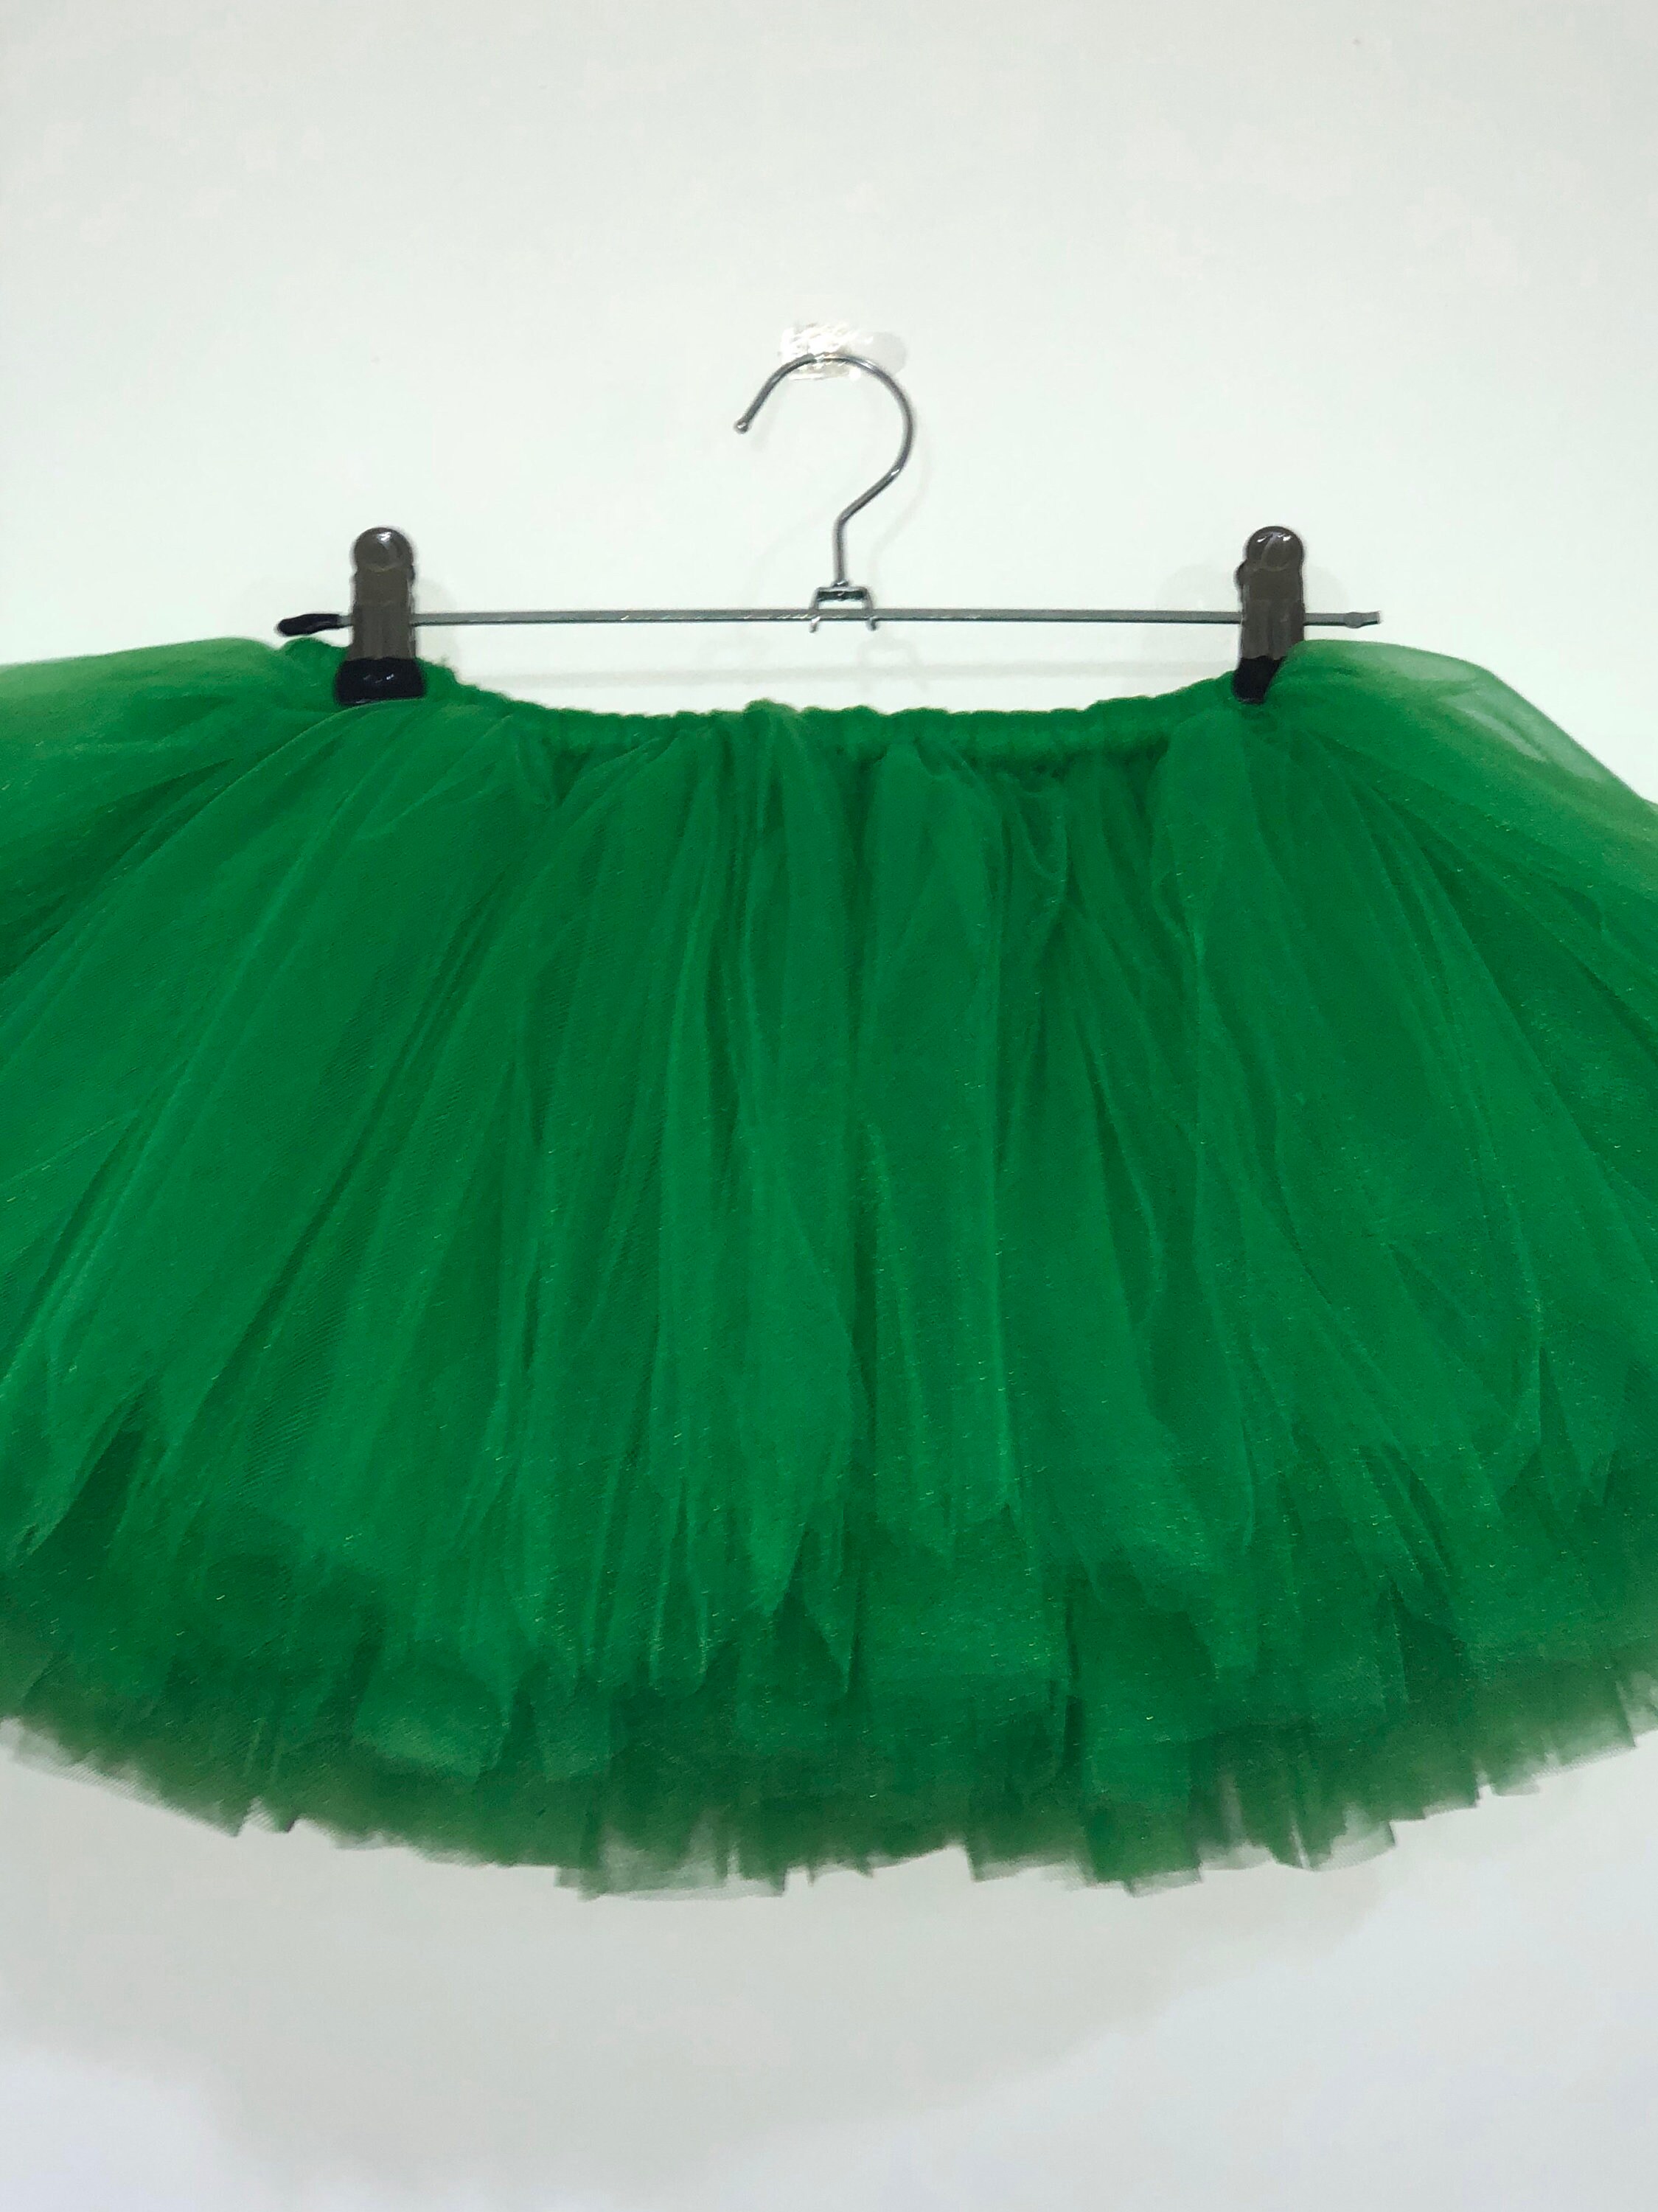 Handmade tulle tutu dark green emerald petticoat skirt dance costume fairy 